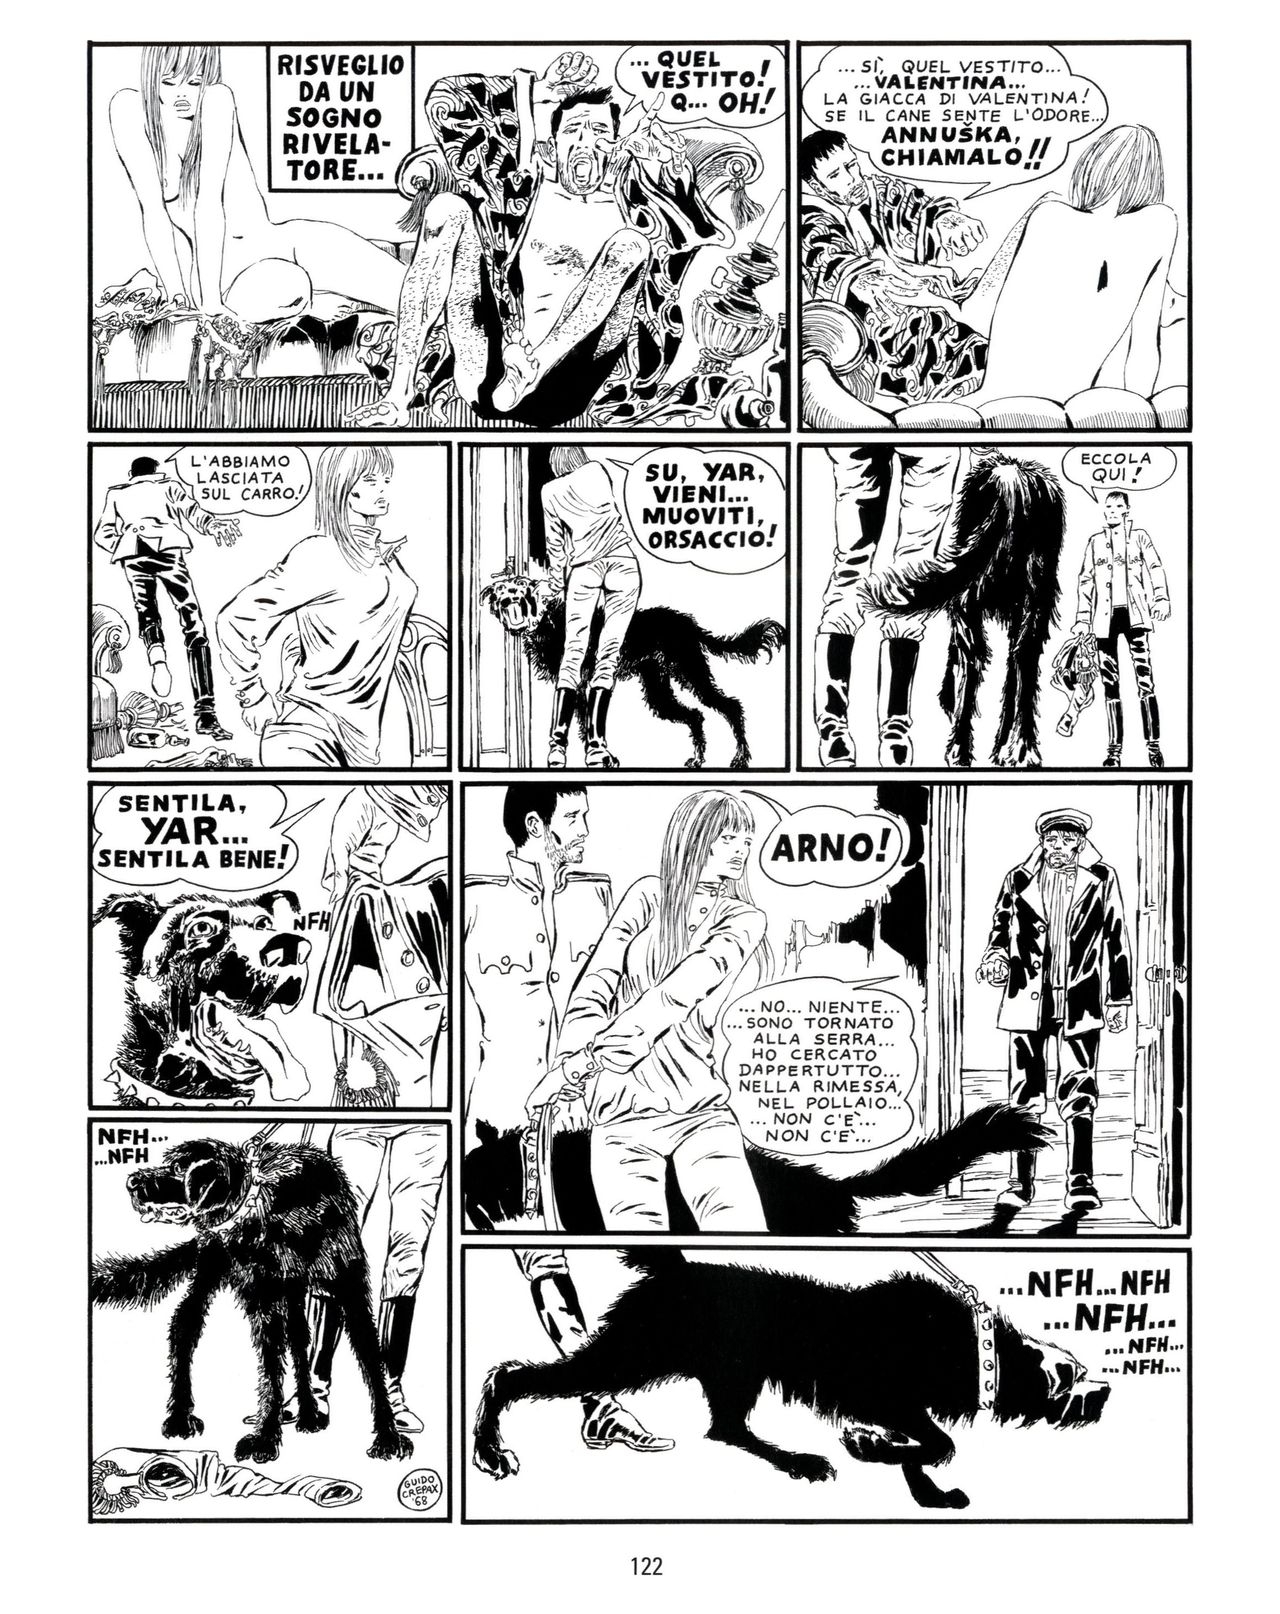 [Guido Crepax] Erotica Fumetti #25 : L'ascesa dei sotterranei : I cavalieri ciechi [Italian] 123